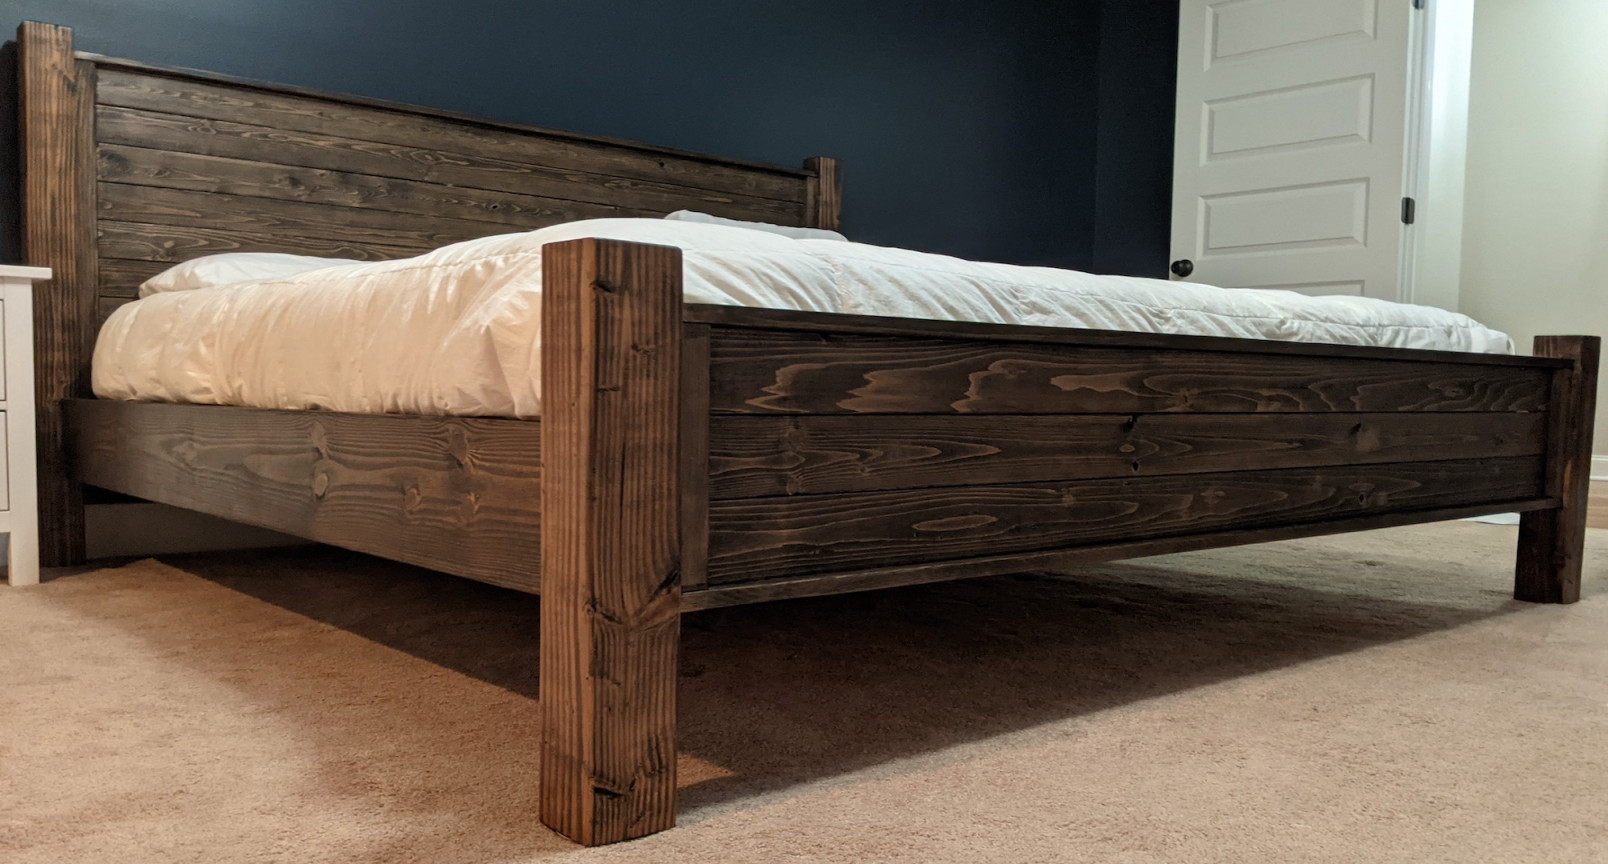 King-Size Solid-Wood Platform Bed: Project Complete – Jon Penland